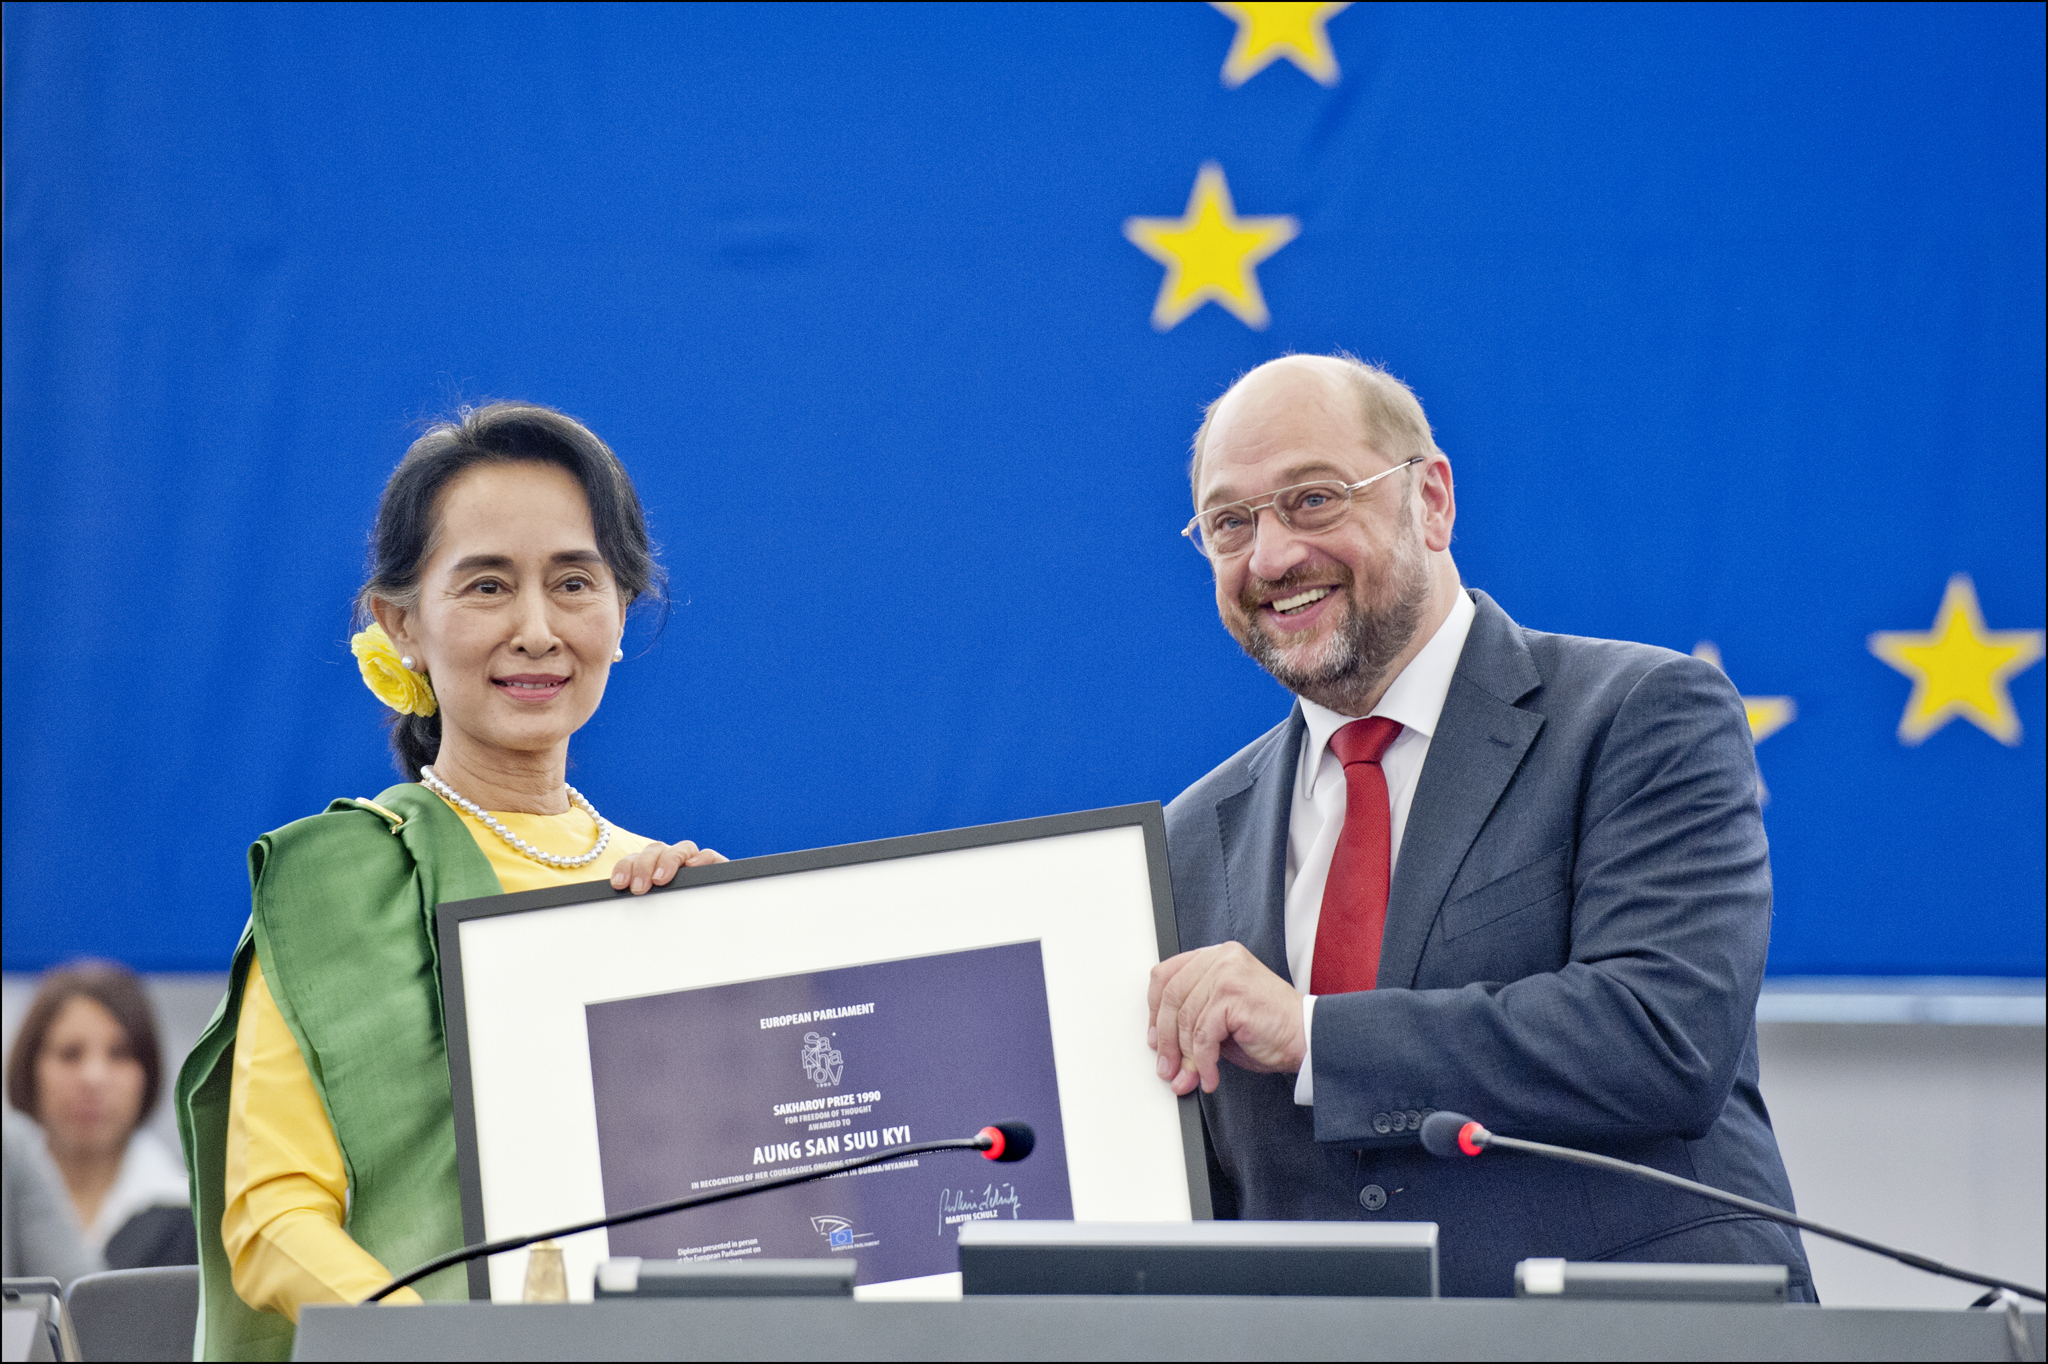 Aung San Suu Kyi – finally receiving the Sakharov Prize